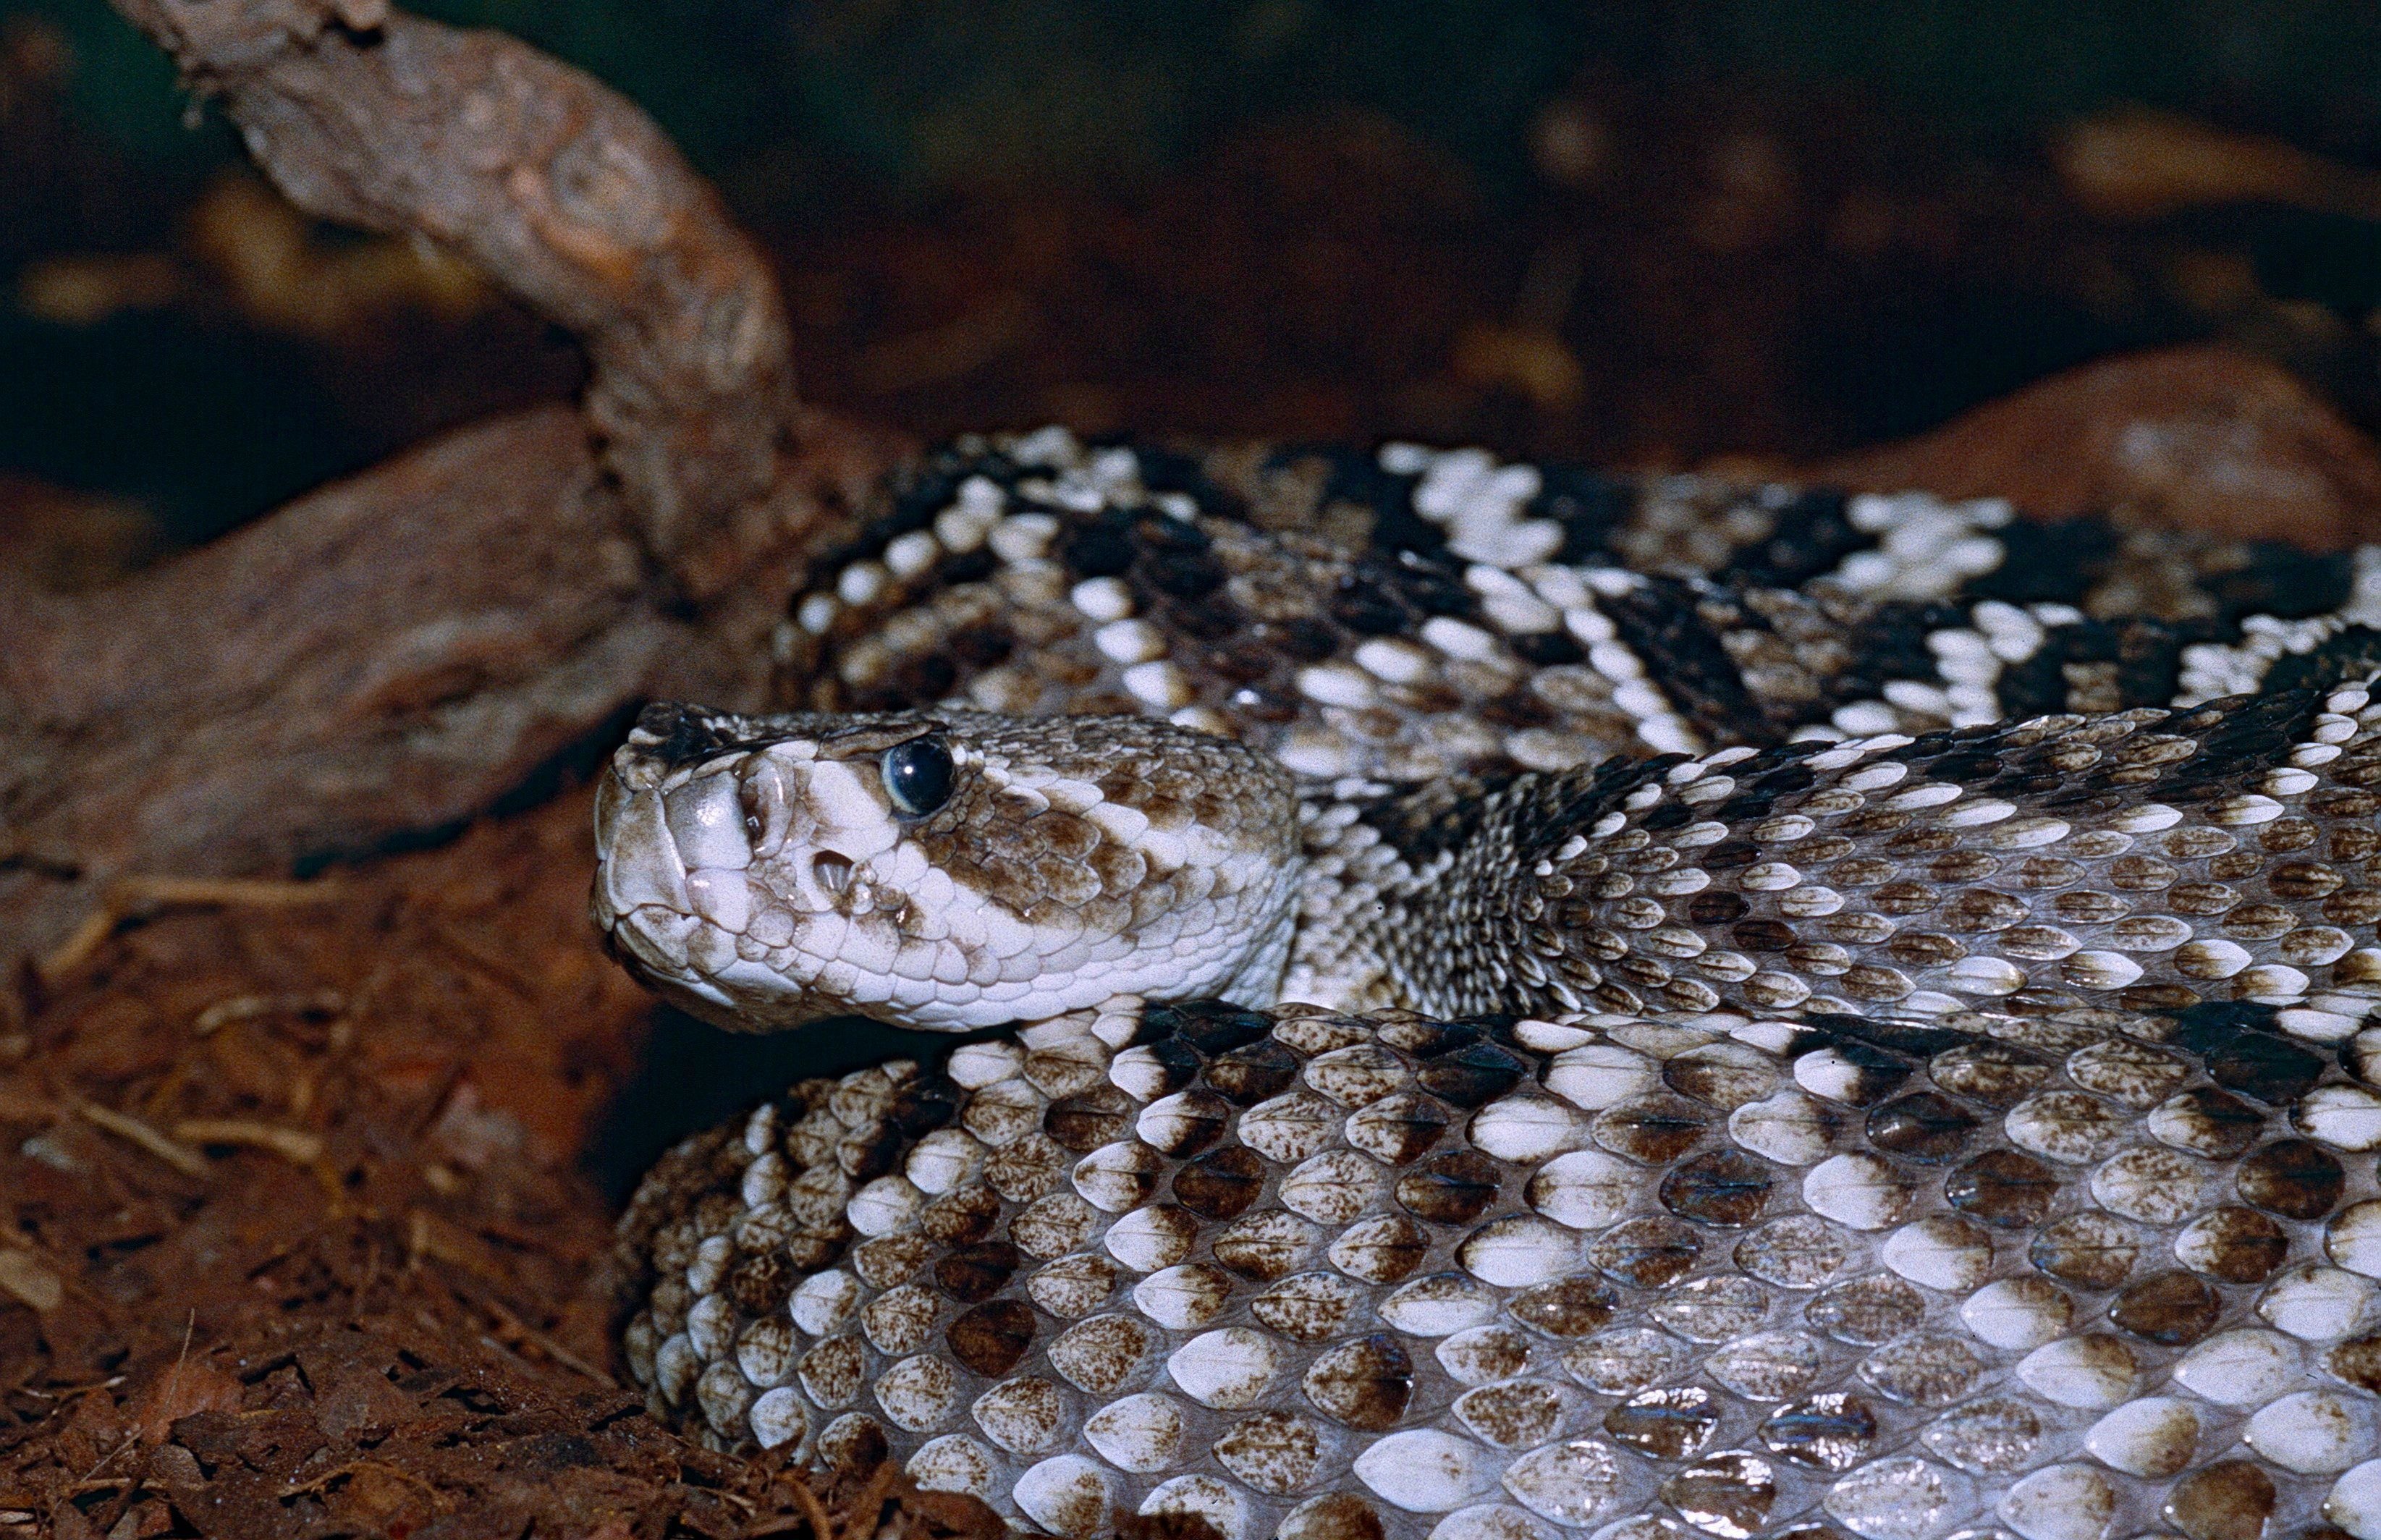 Eastern diamondback rattlesnake, Desktop wallpaper, Wildlife-themed design, Serpent imagery, 3290x2130 HD Desktop